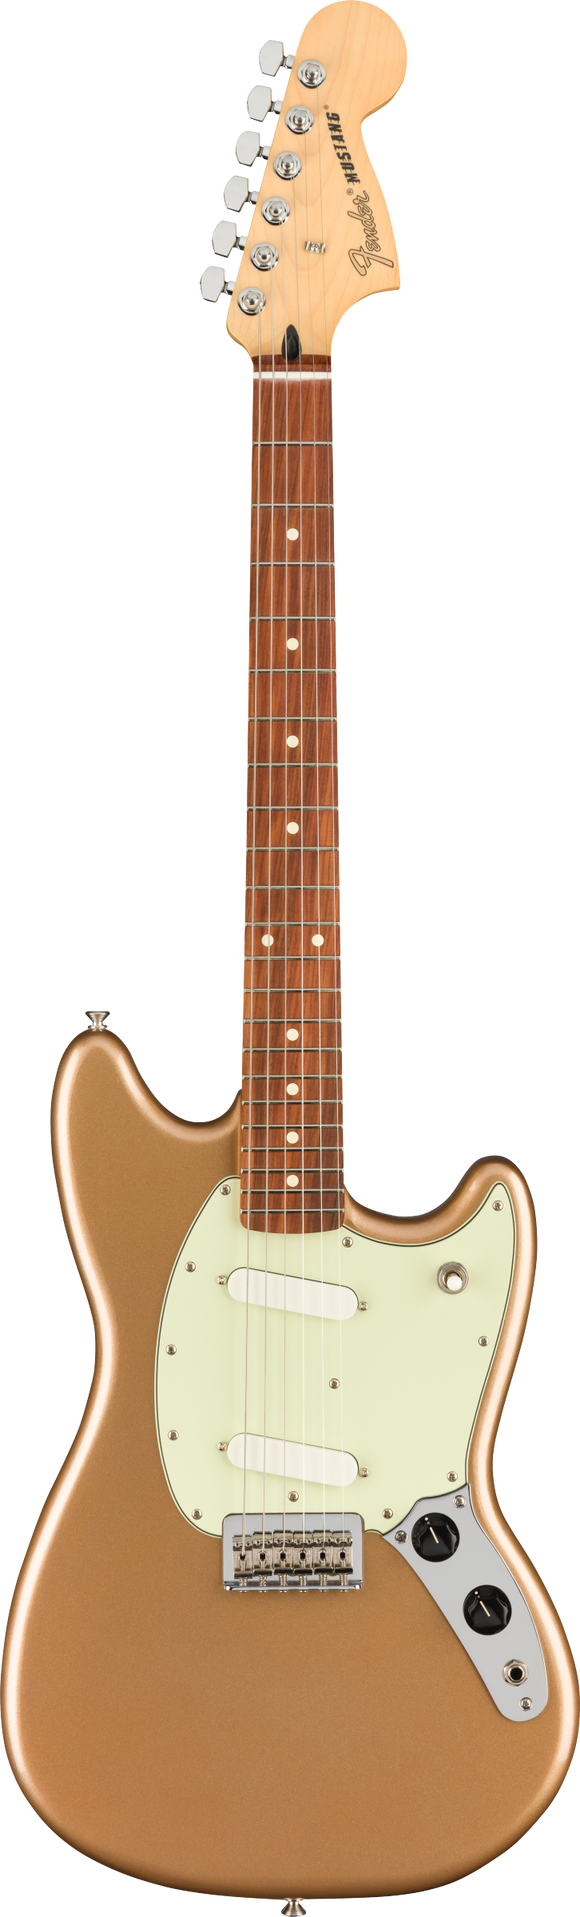 Fender Mustang, Player Series, Firemist Gold